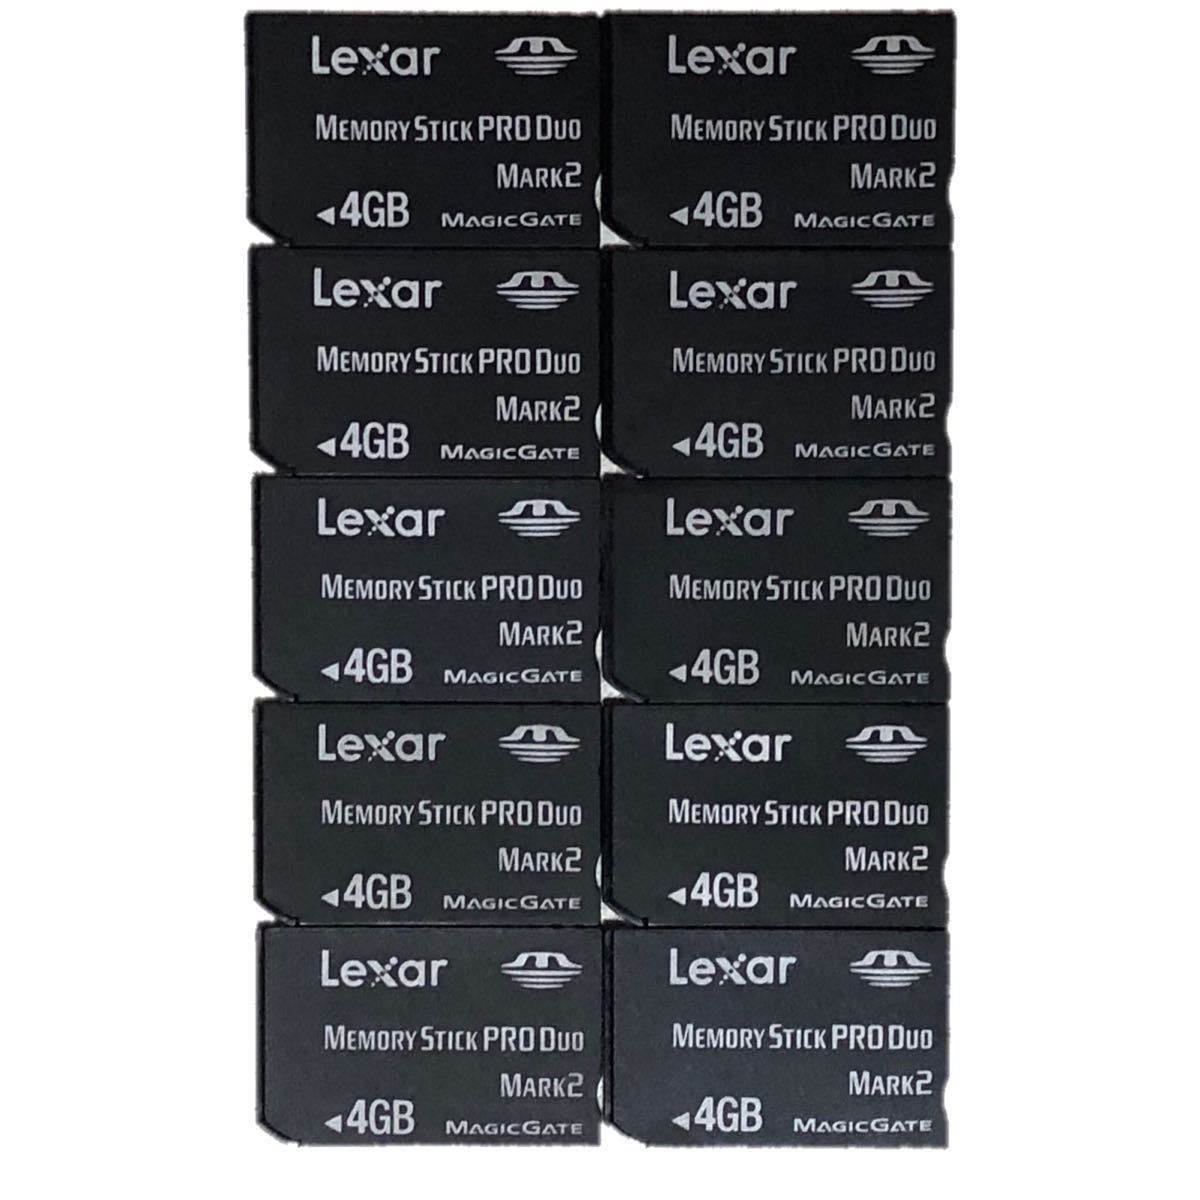 # operation verification settled # Lexar memory stick PRO DUO 4GB 10 sheets memory card digital camera memoryre kissa -